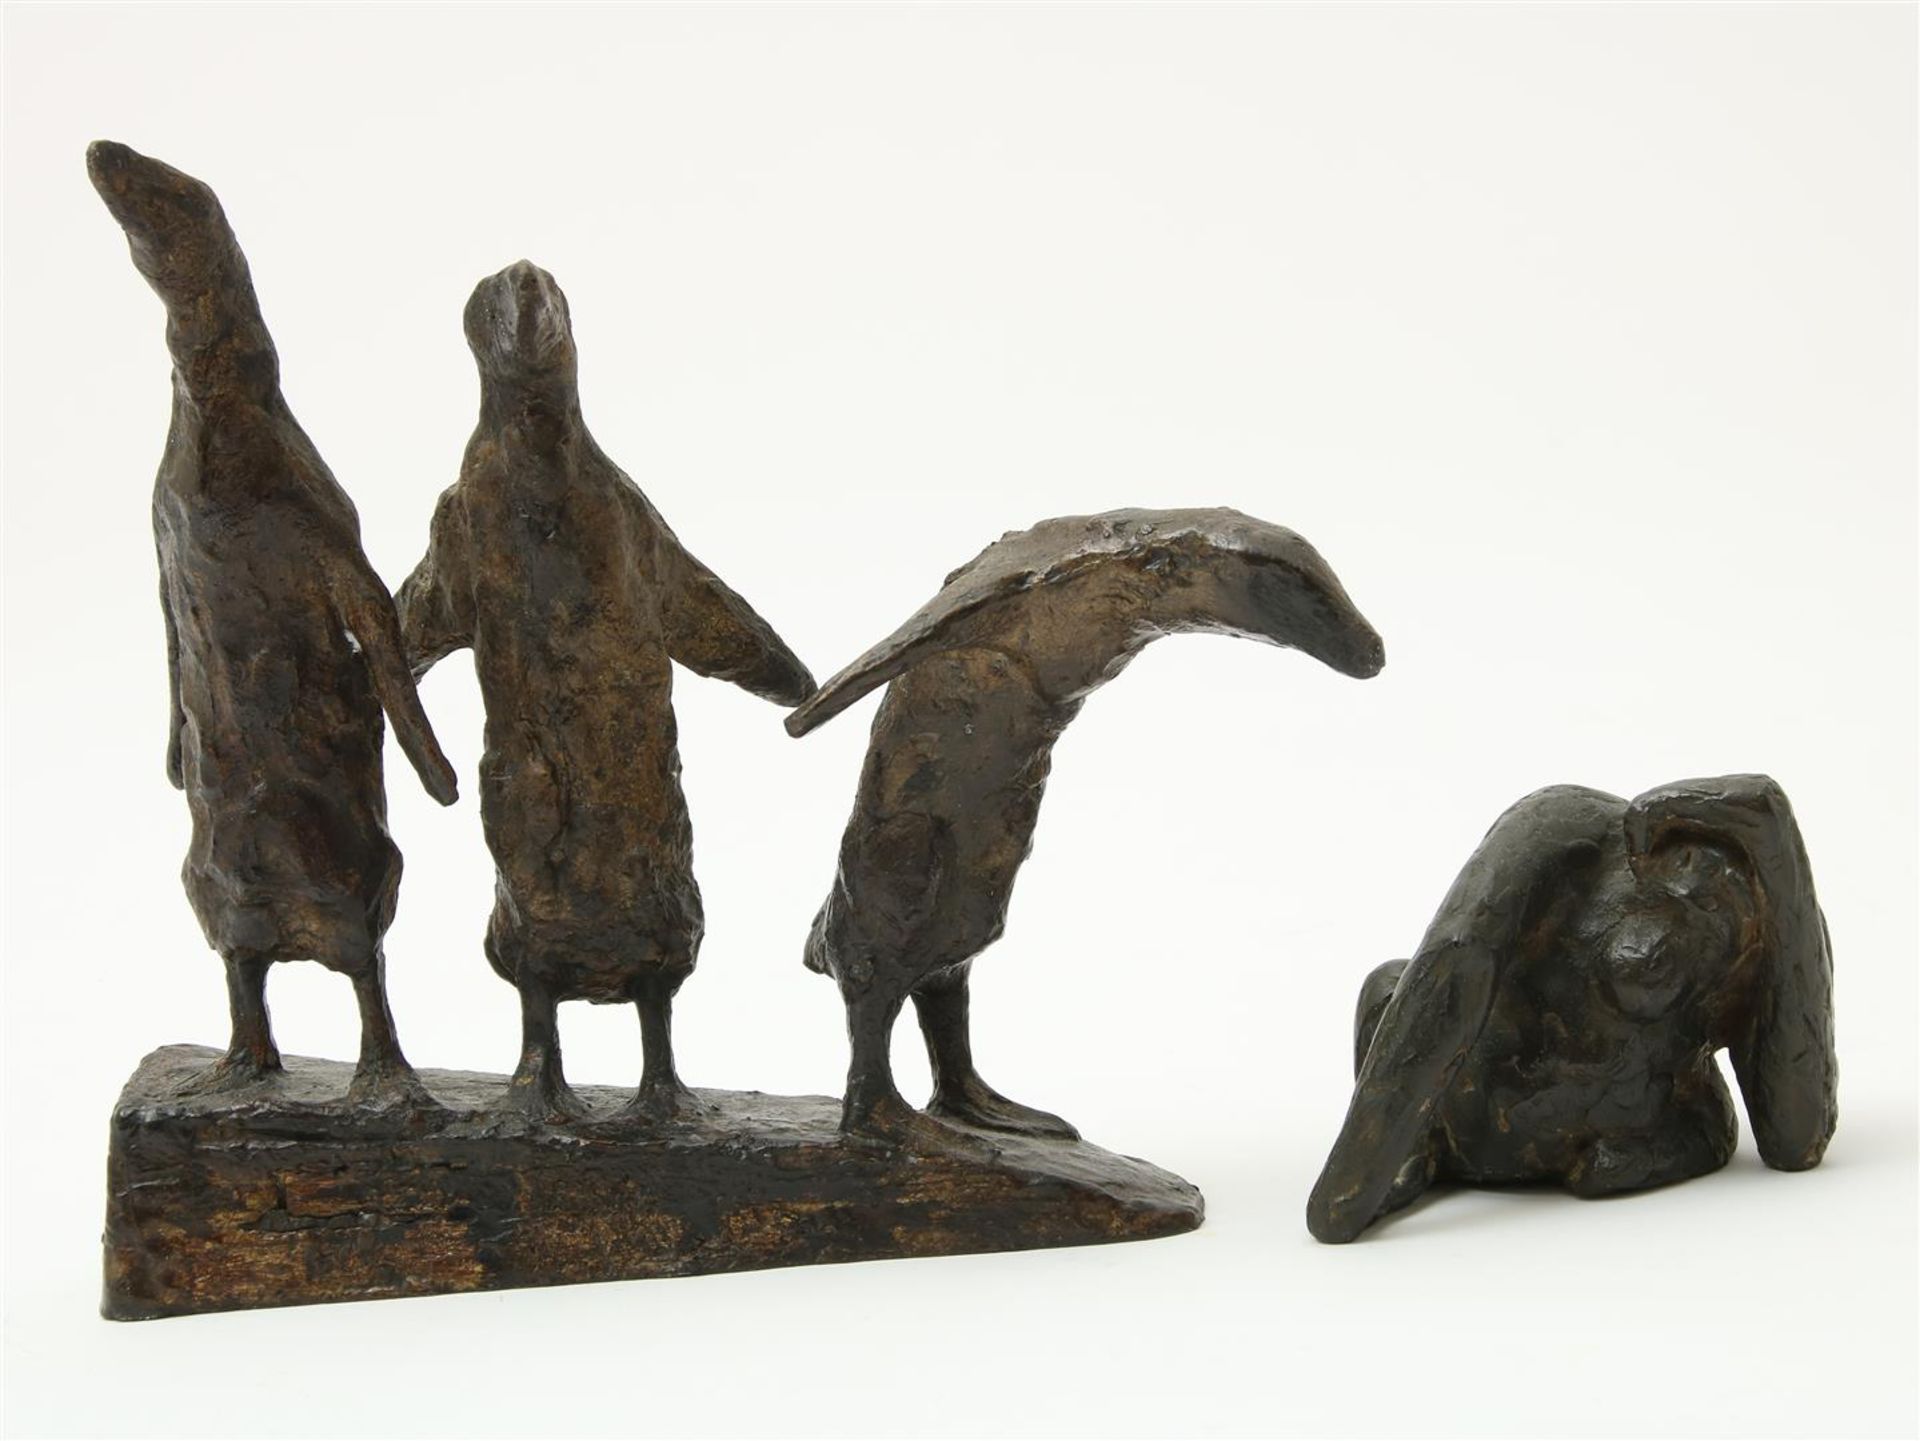 Sculptures of Penguins and Orang Utan